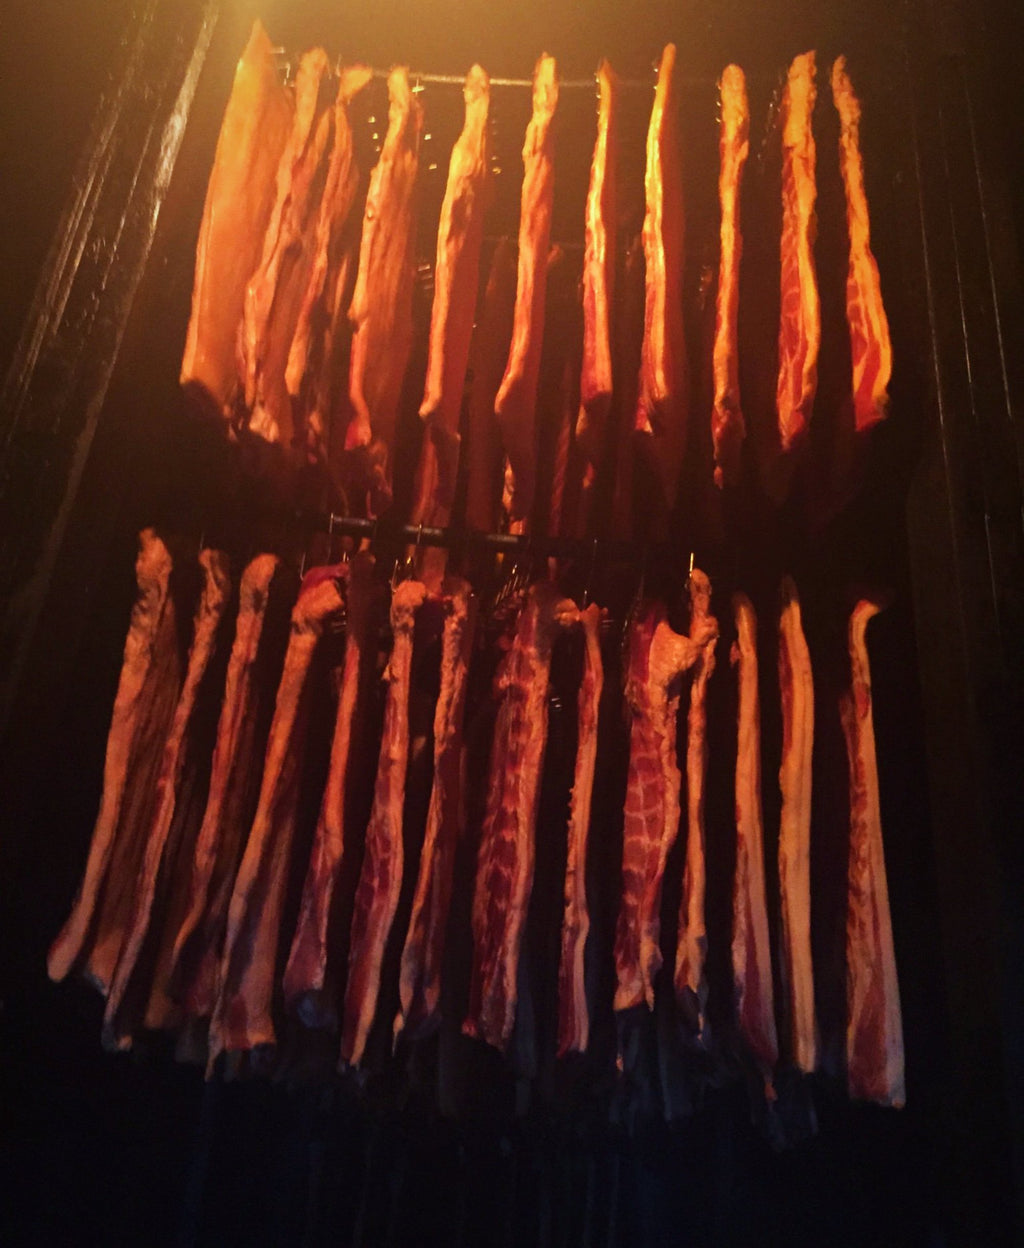 Father's Hickory Smoked 2lb Bacon Slab - CBS2